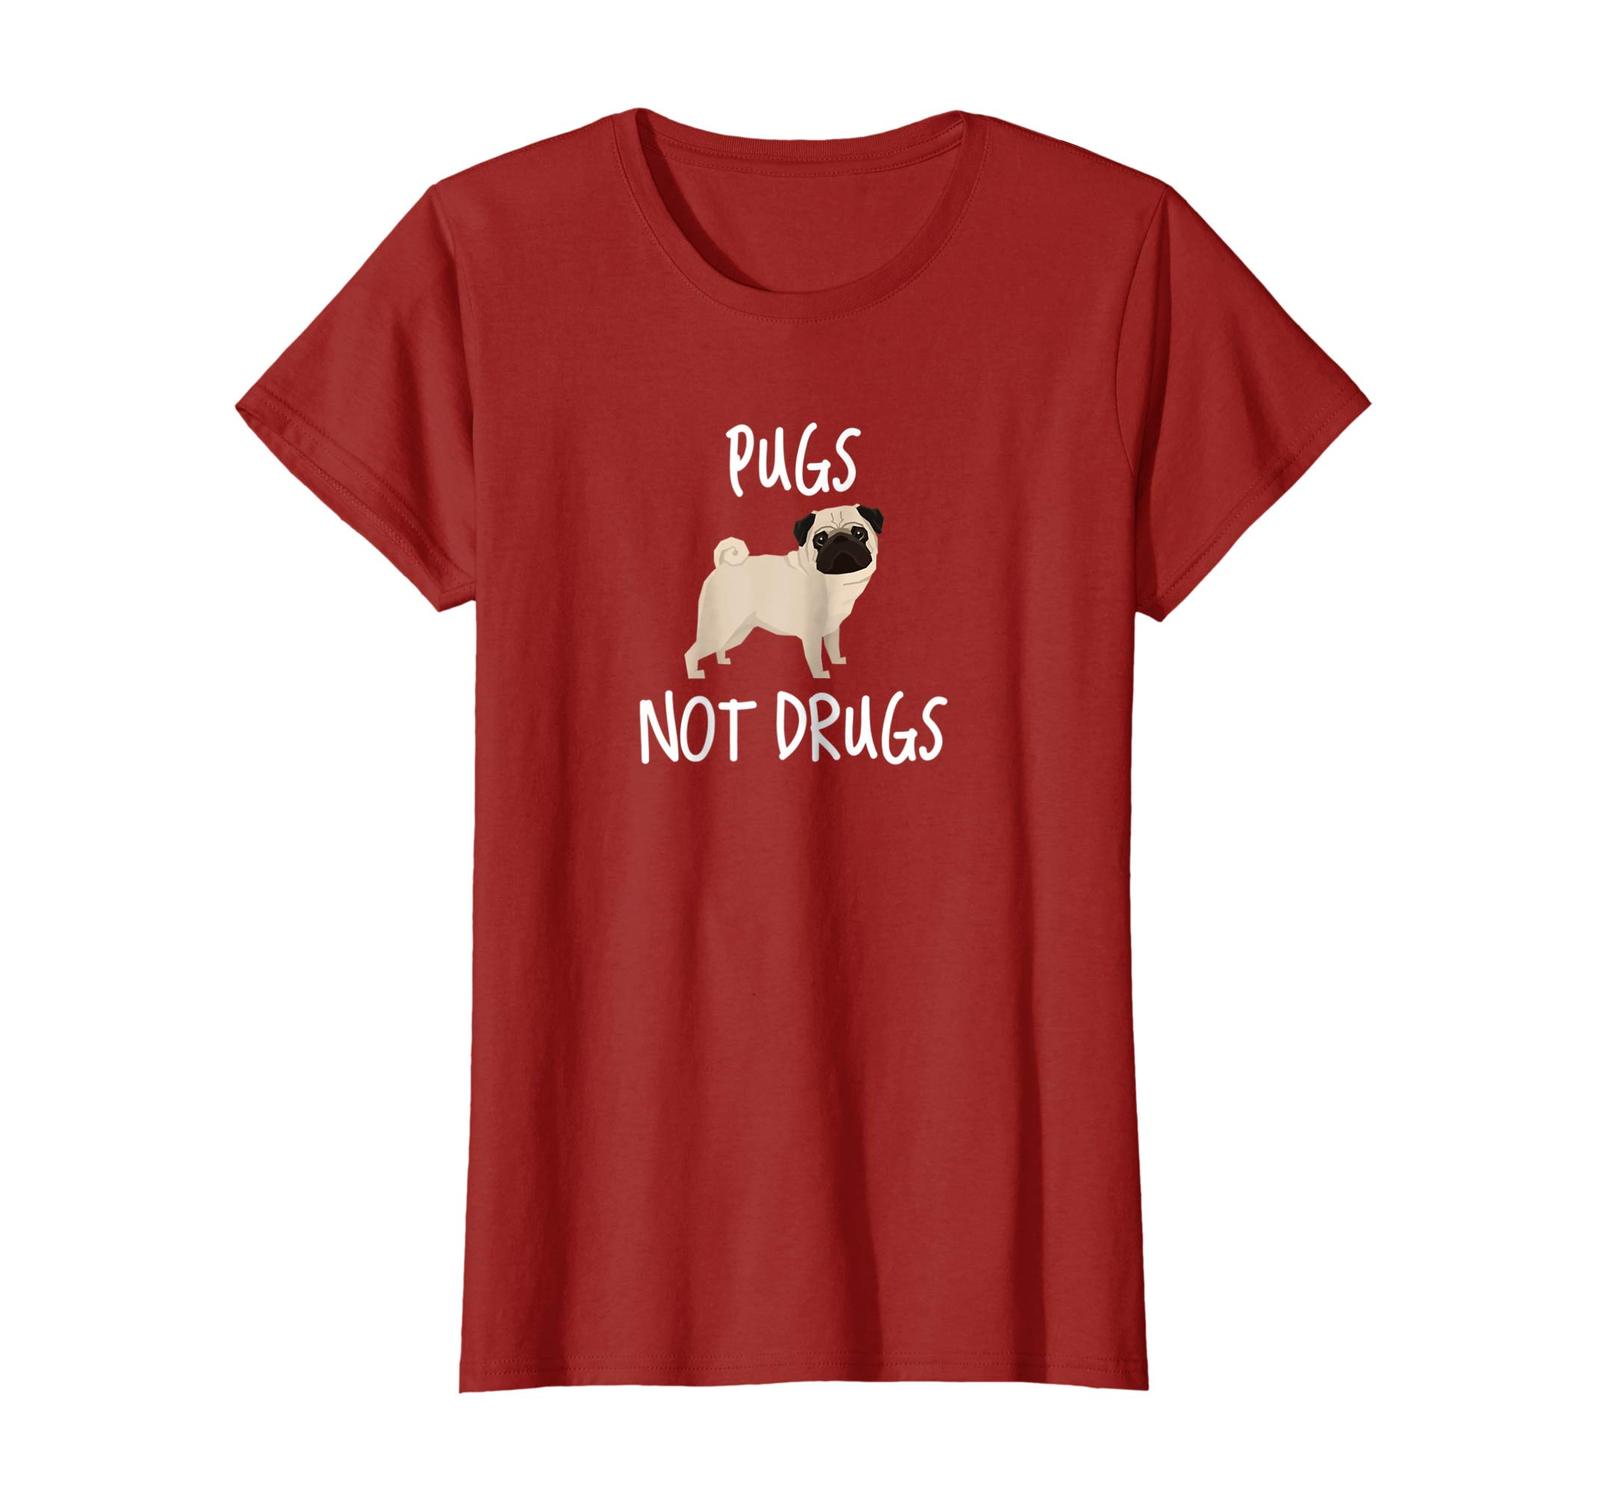 Dog Fashion - Pugs Not Drugs T-Shirt Wowen